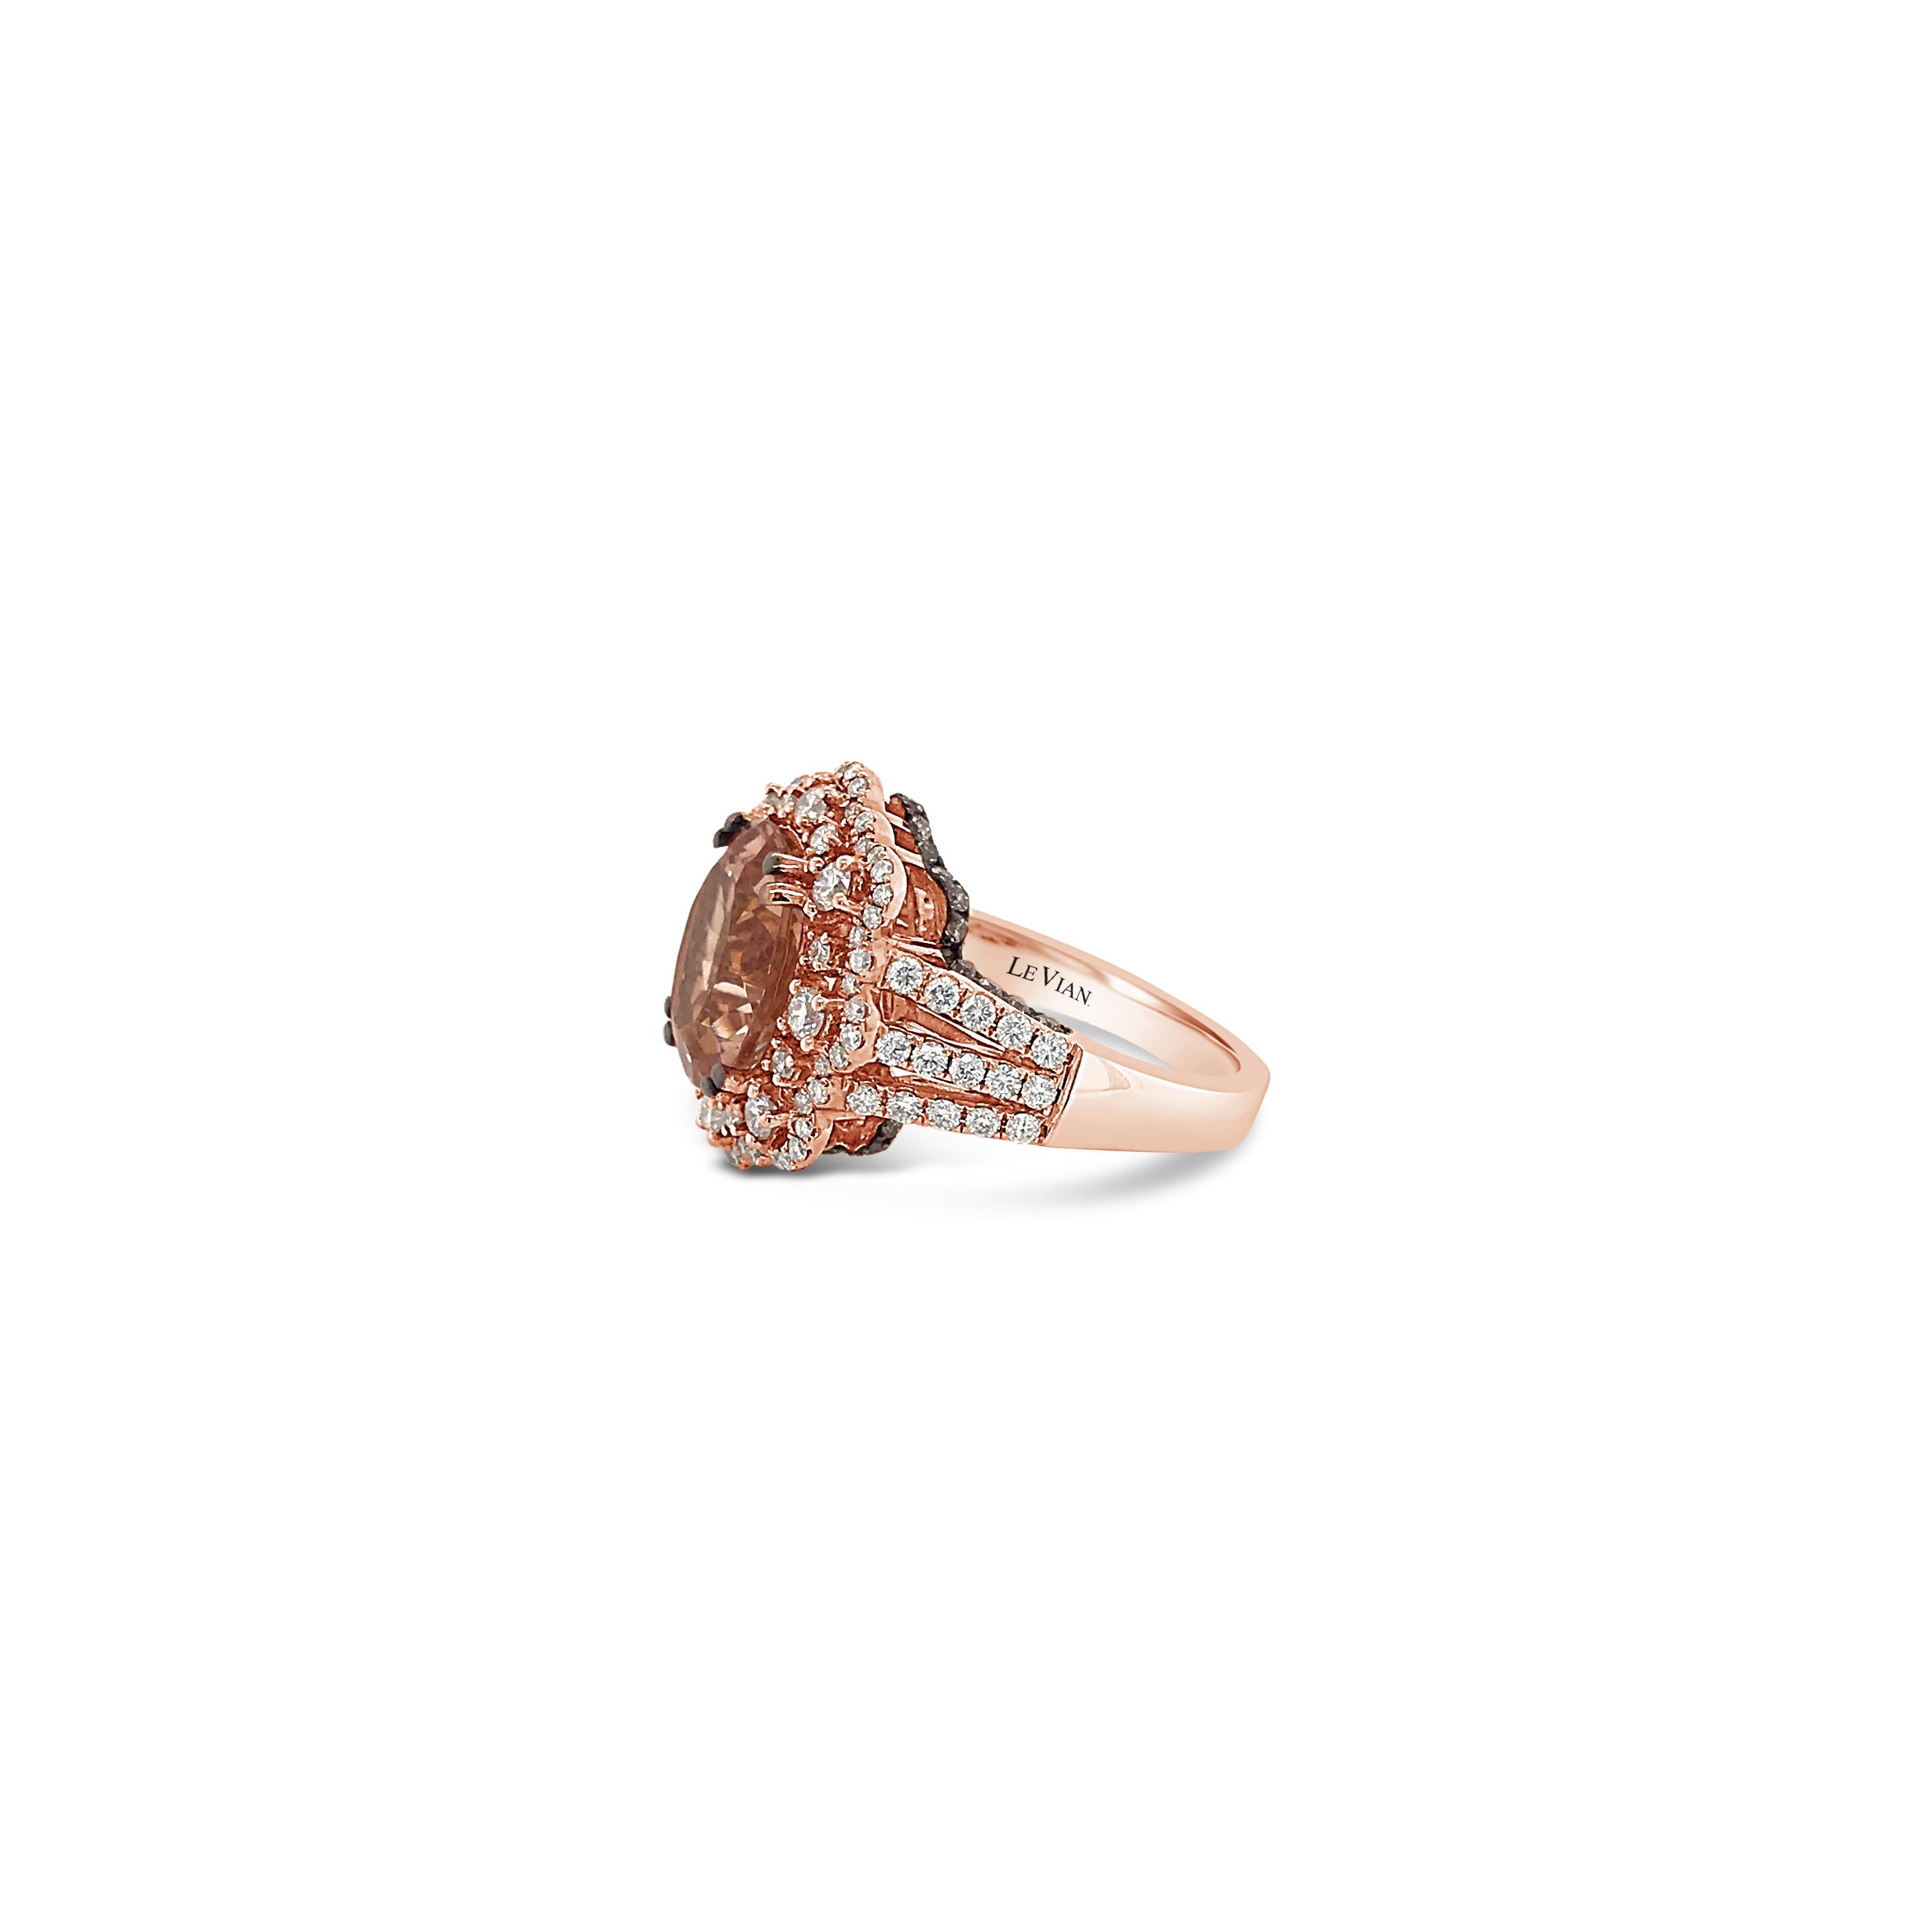 LeVian Bague Halo en or rose 18 carats avec Morganite rose et diamants ronds brun chocolat
